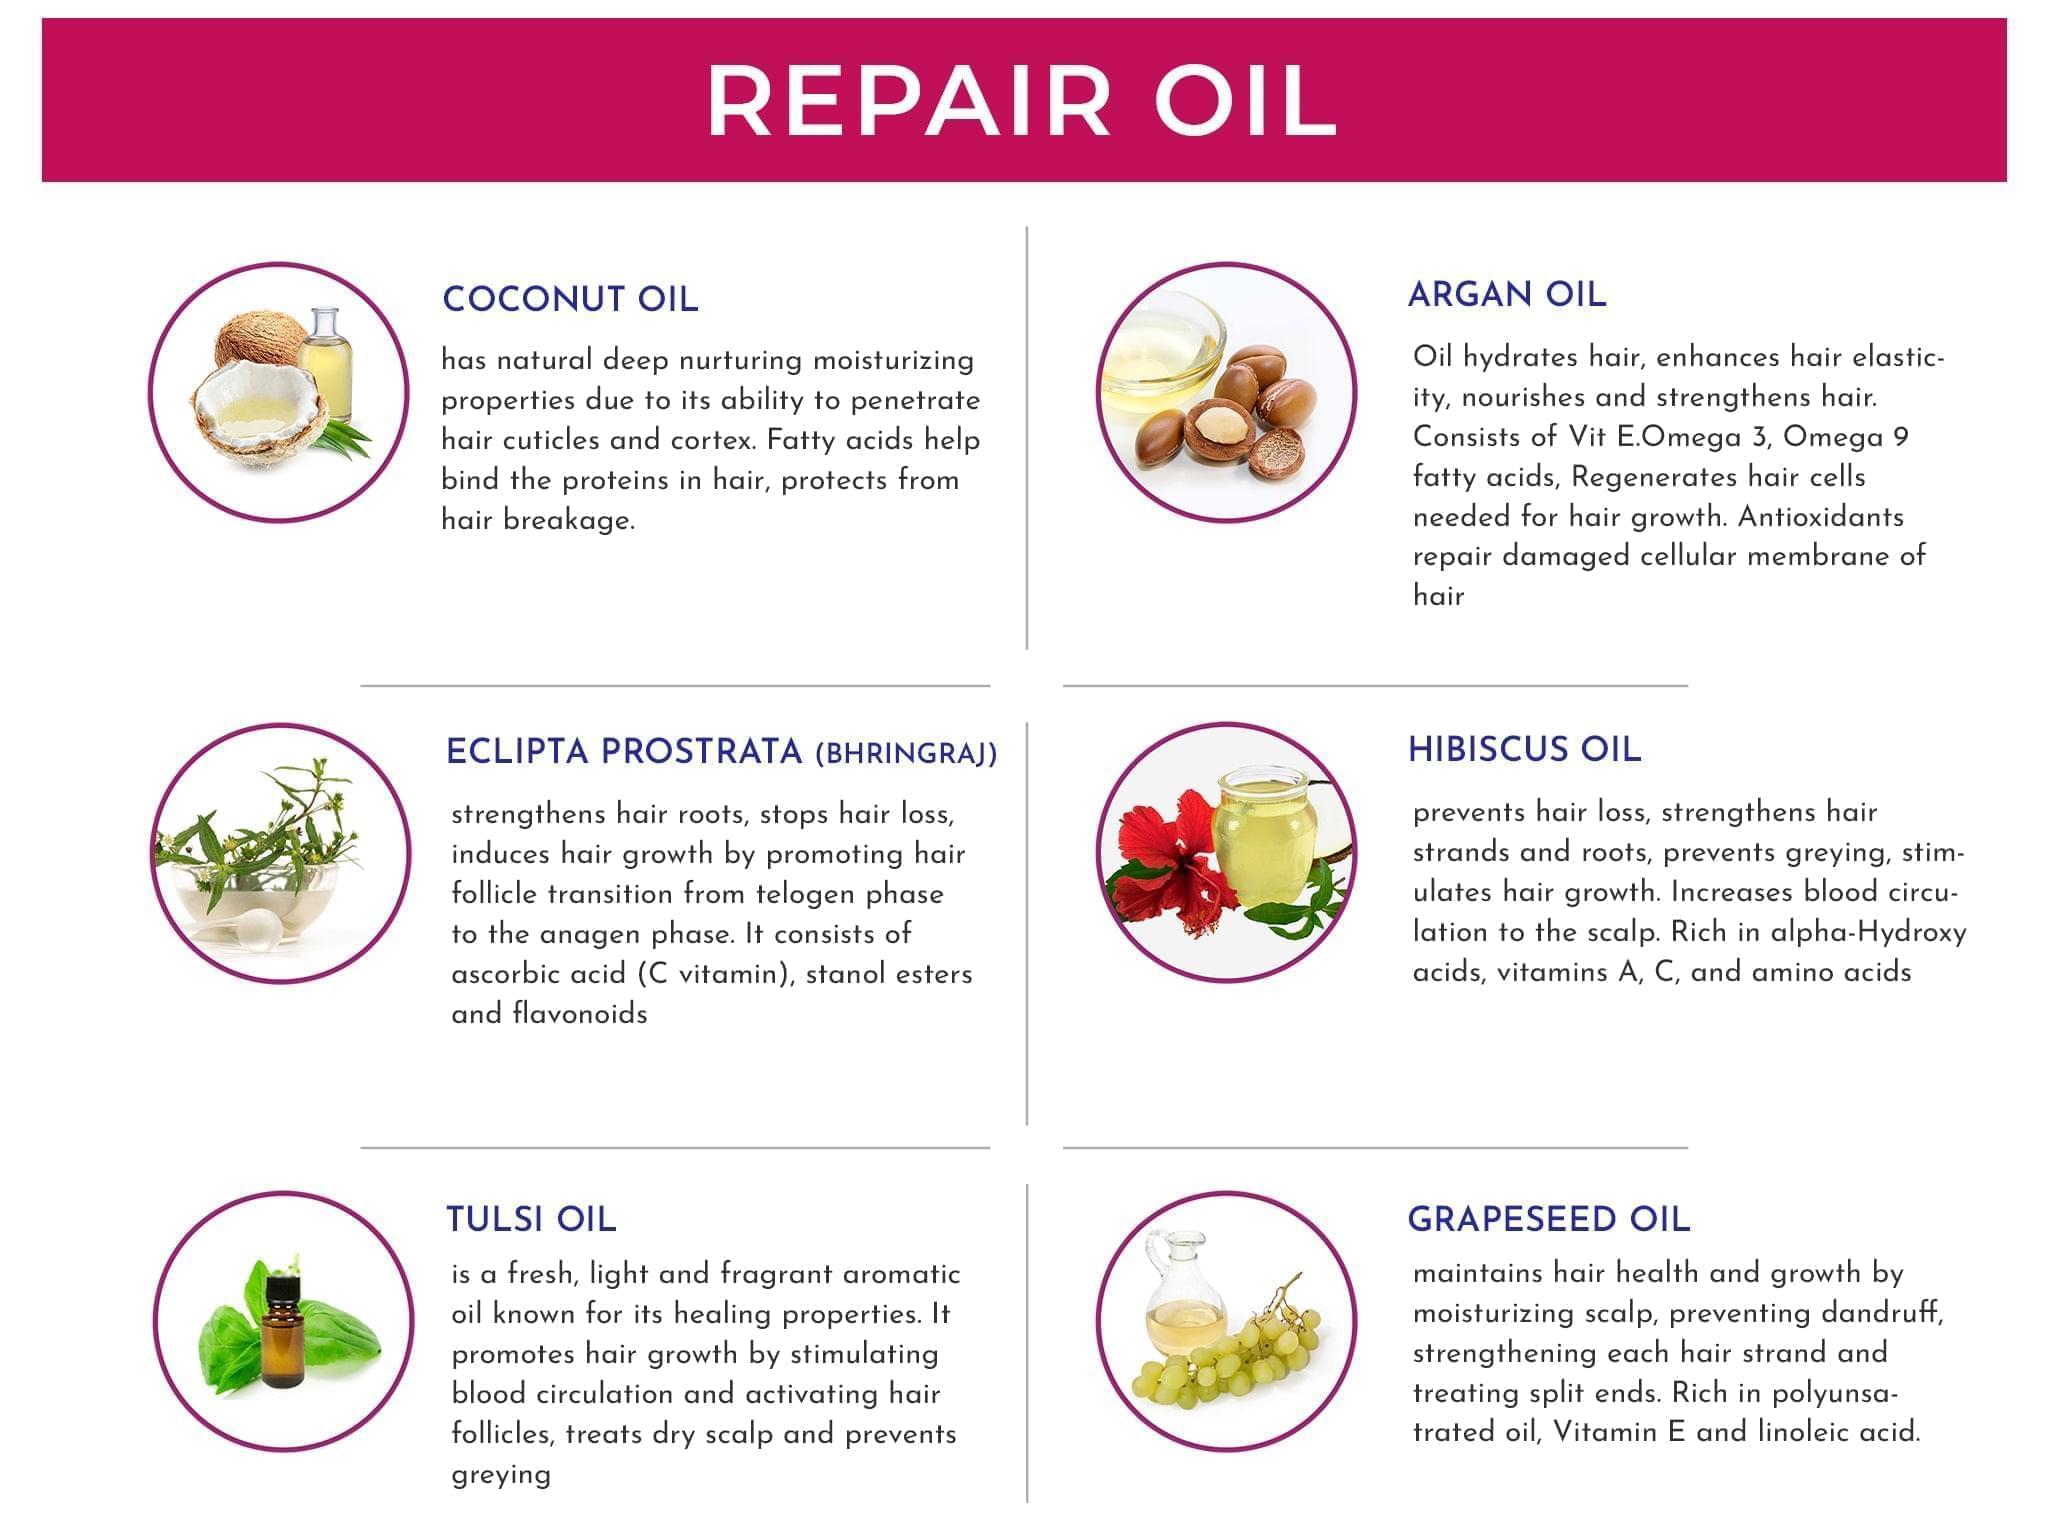 Repair Oil: Transform Your Hair with Deep Nourishment